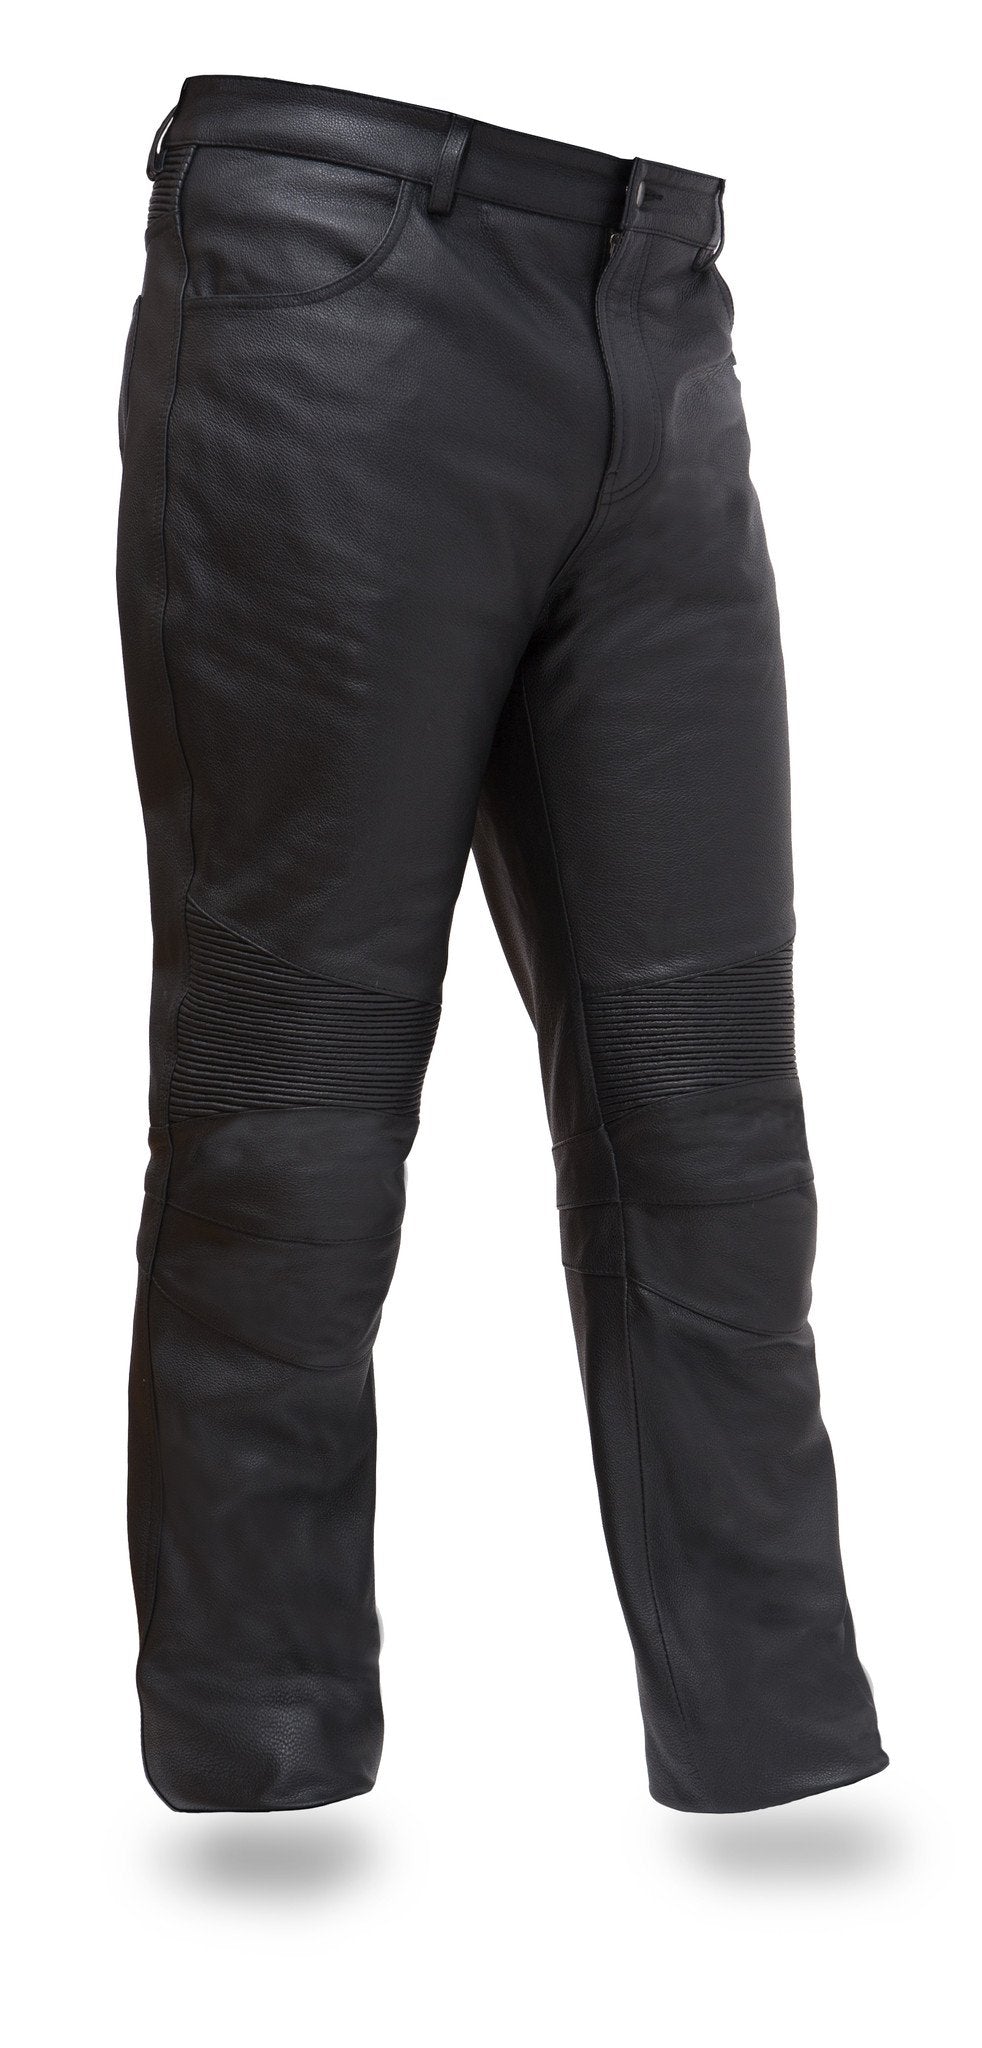 Smarty - Men's Leather Pants - FrankyFashion.com